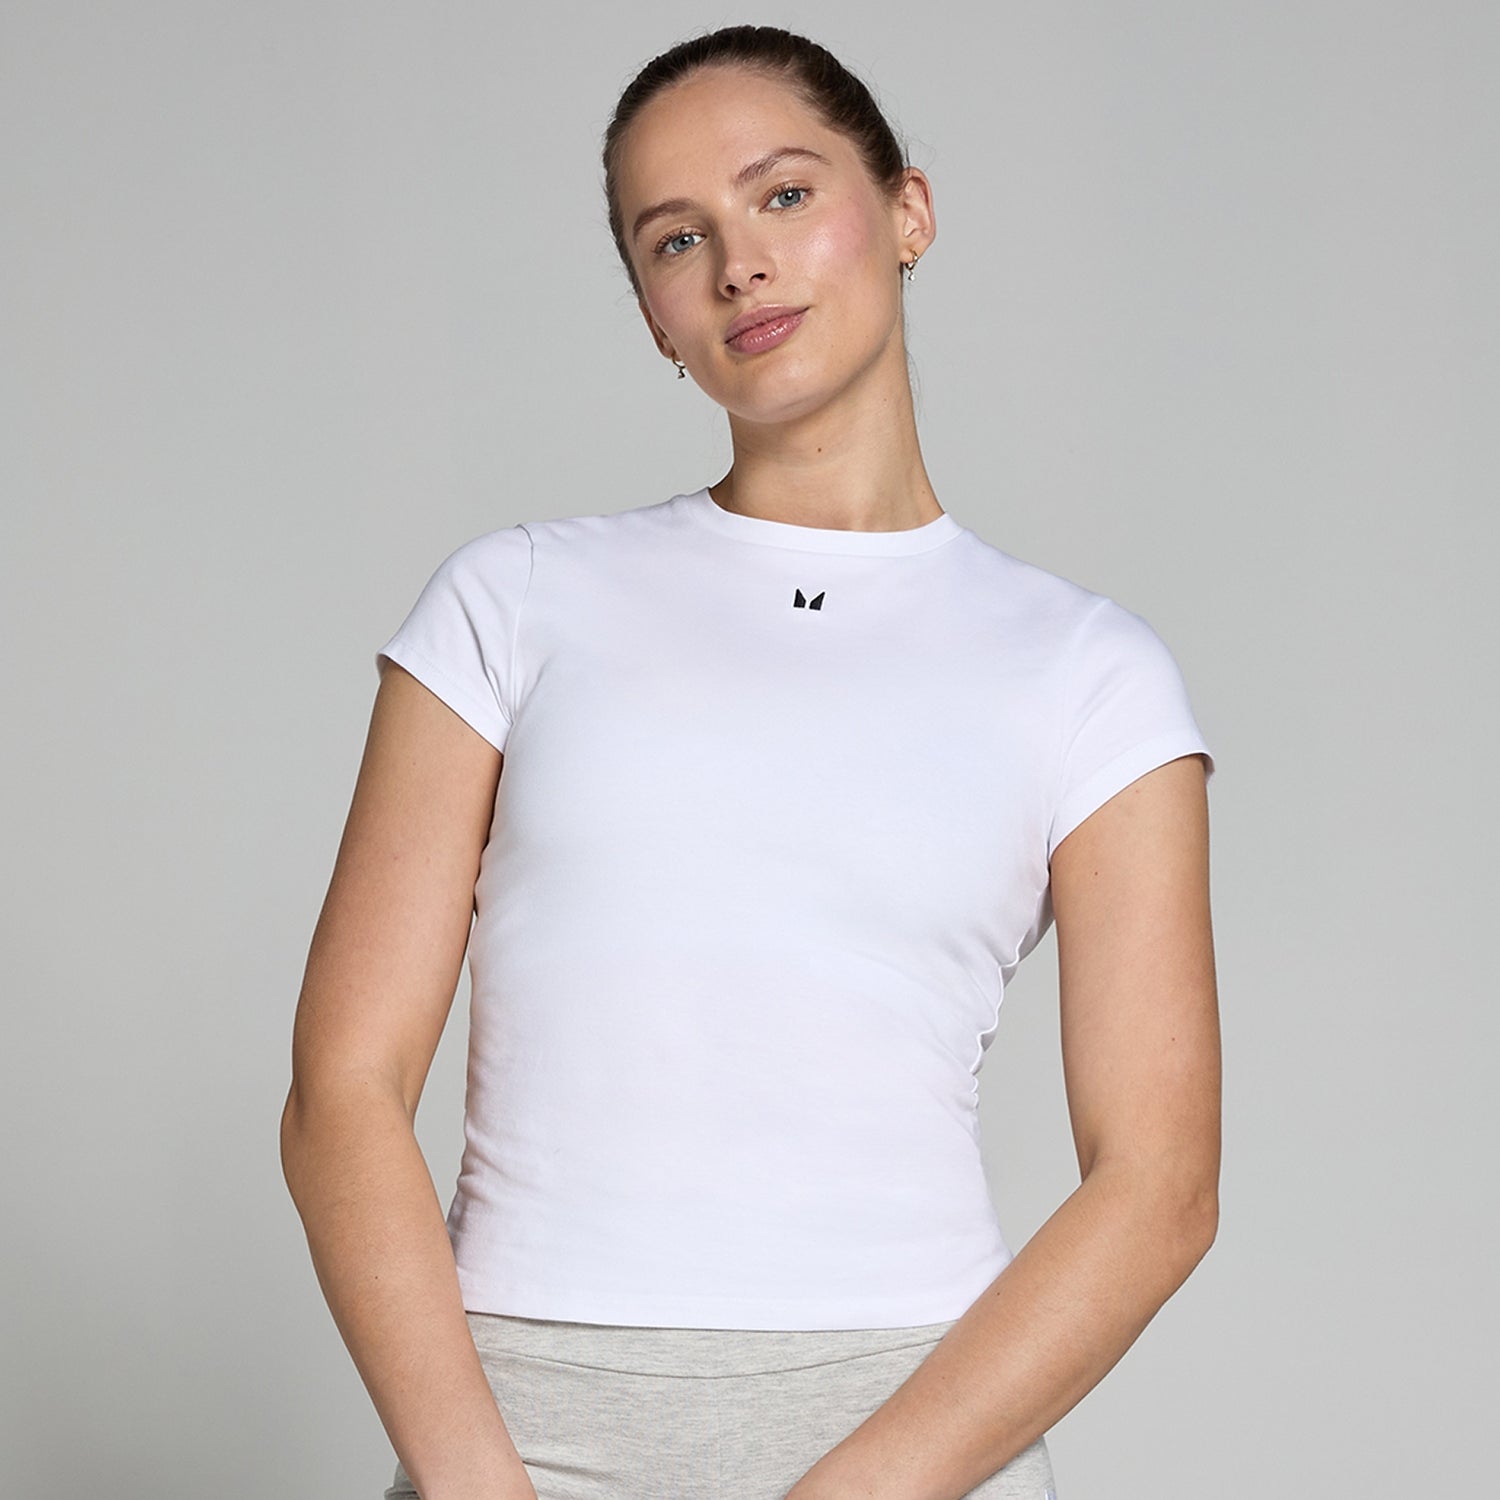 MP Women's Lifestyle Body Fit Short Sleeve T-Shirt - White - XXS